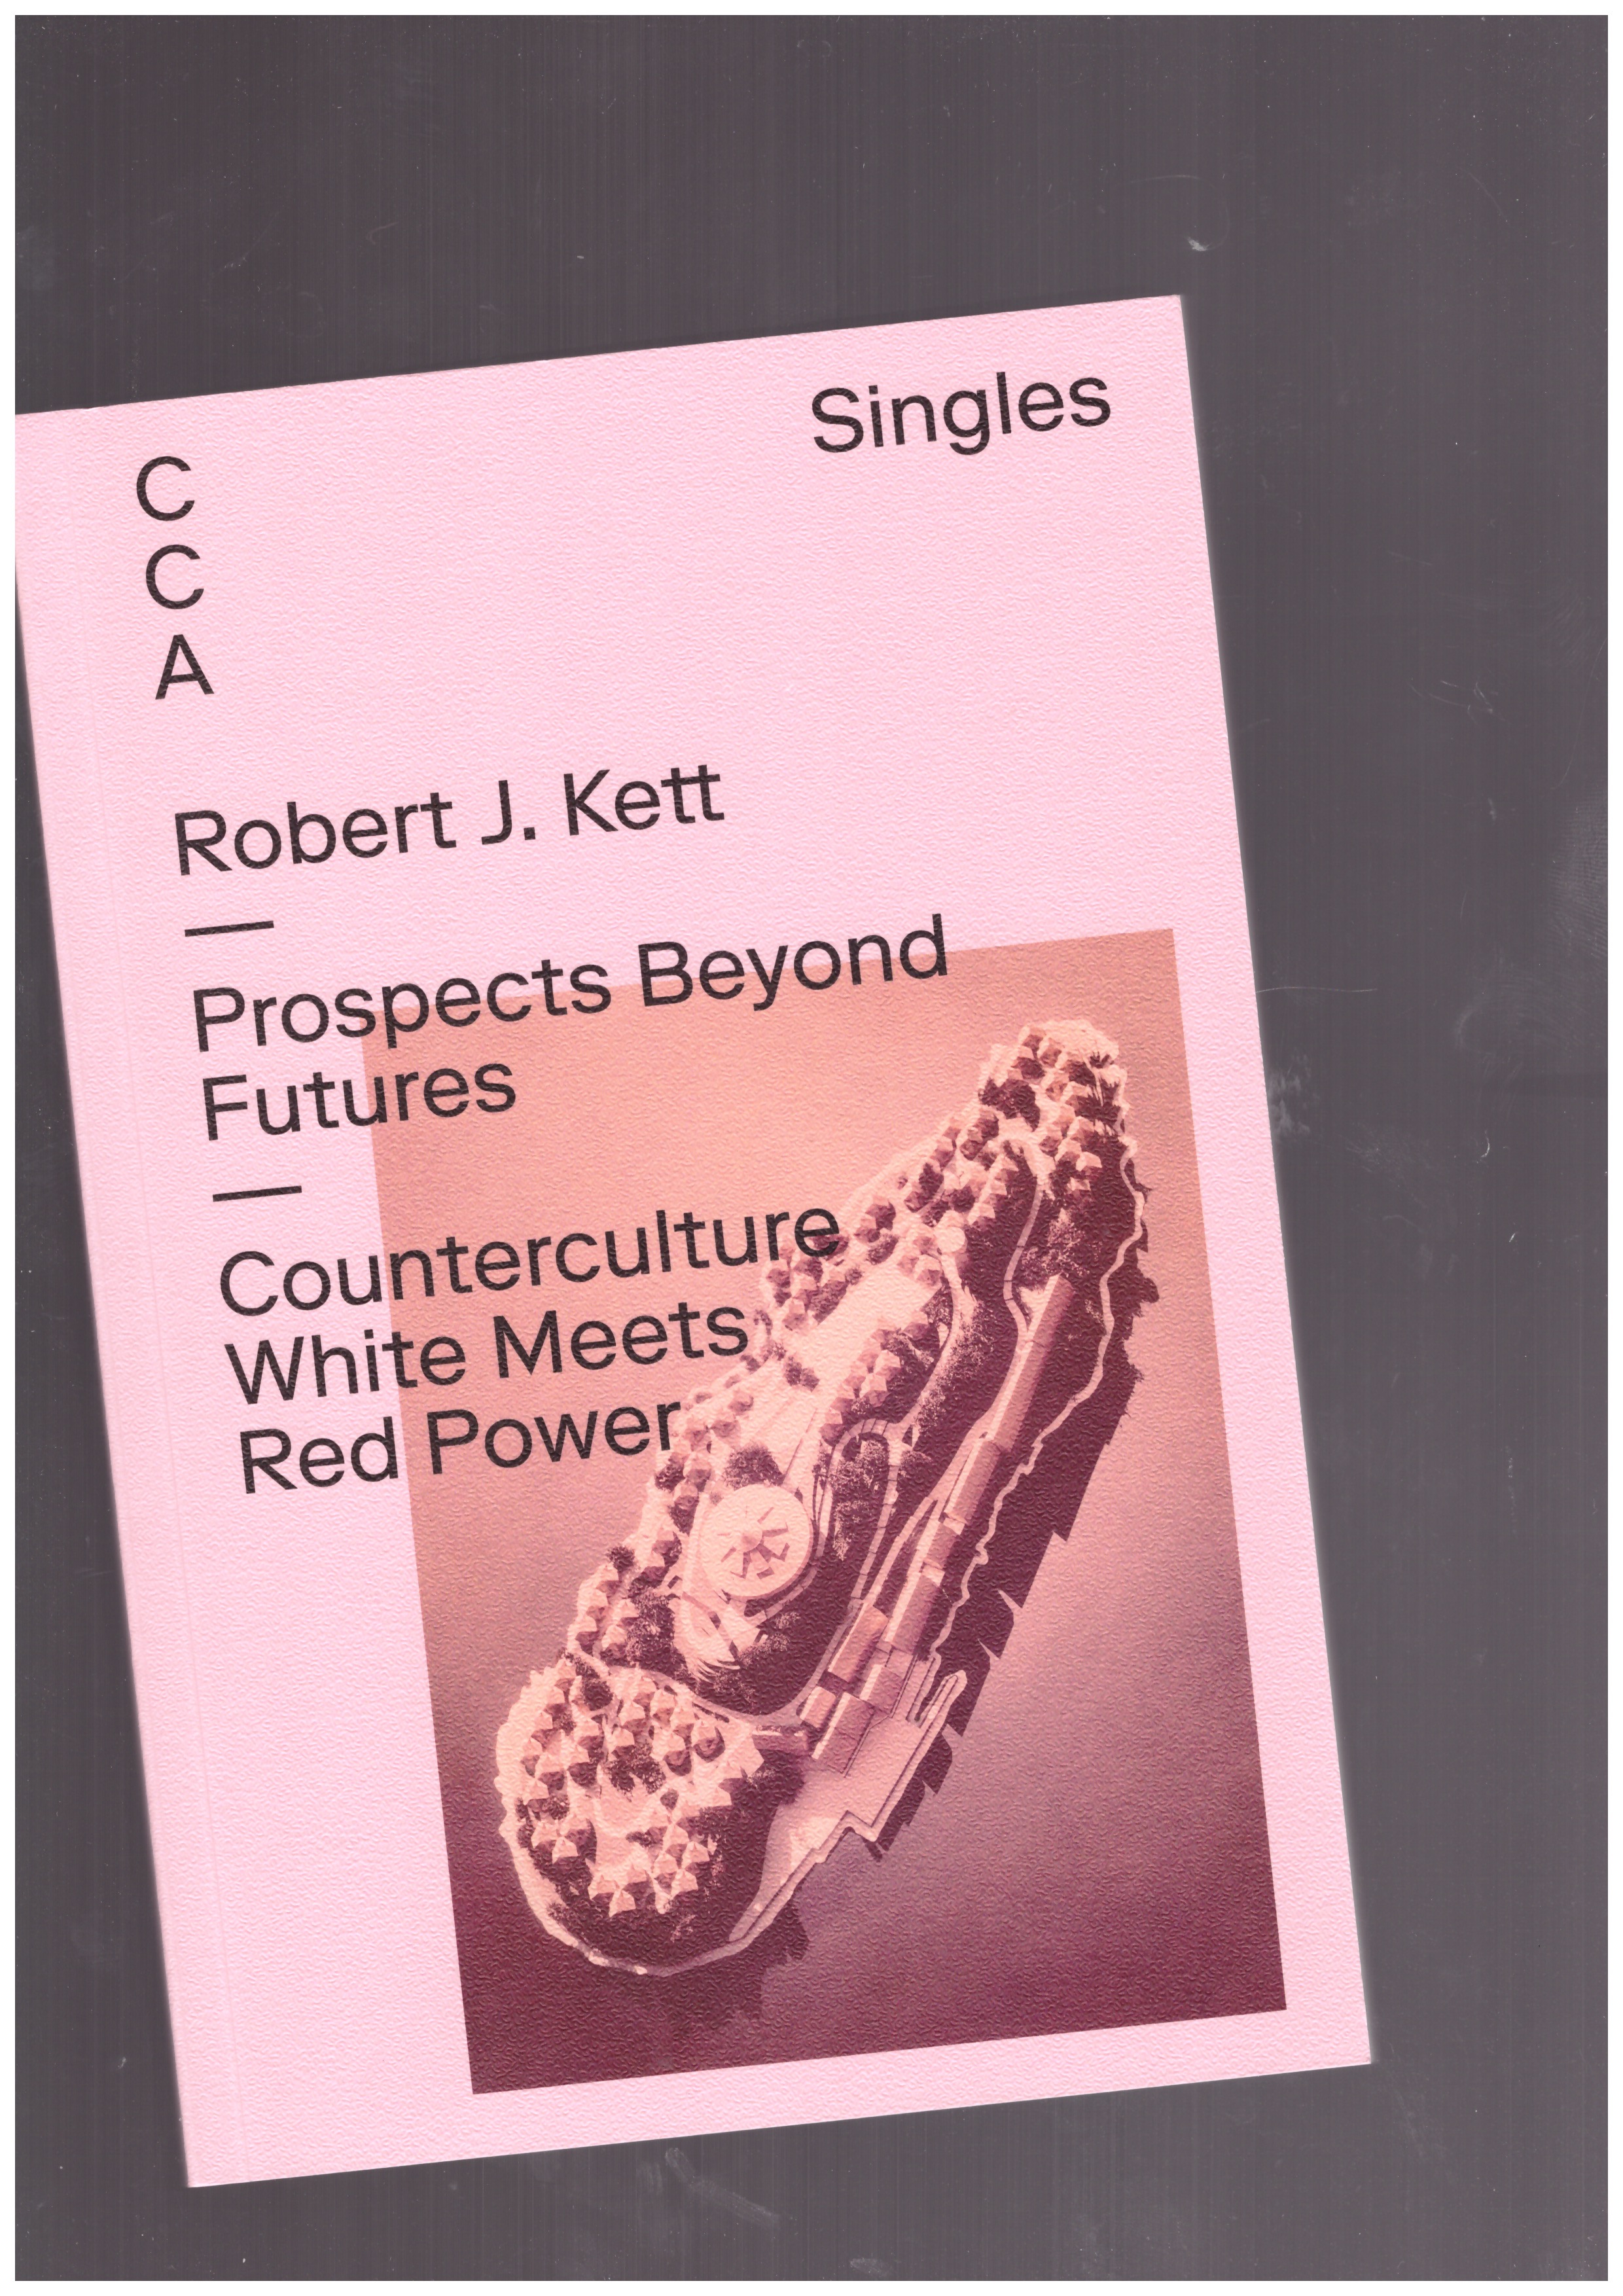 KETT, Robert J. - CCA Singles – Prospects Beyond Futures. Counterculture White Meets Red Power